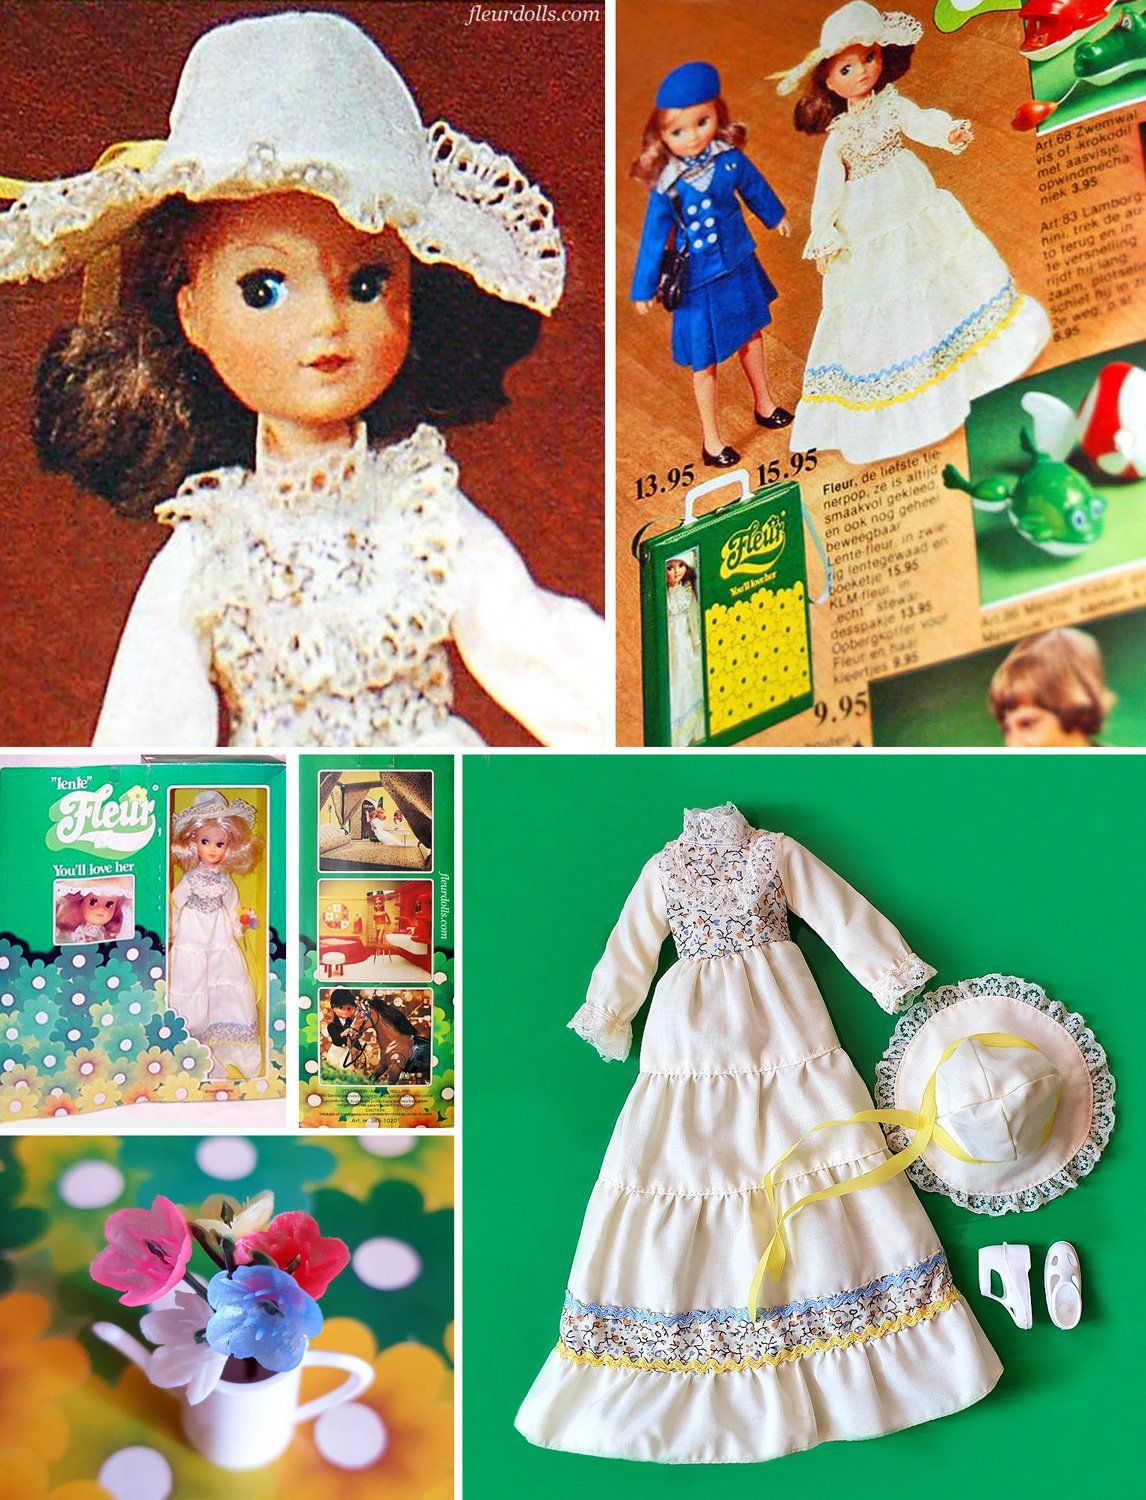 Lente Fleur doll Spring by Otto Simon Netherlands 1980s fashion doll